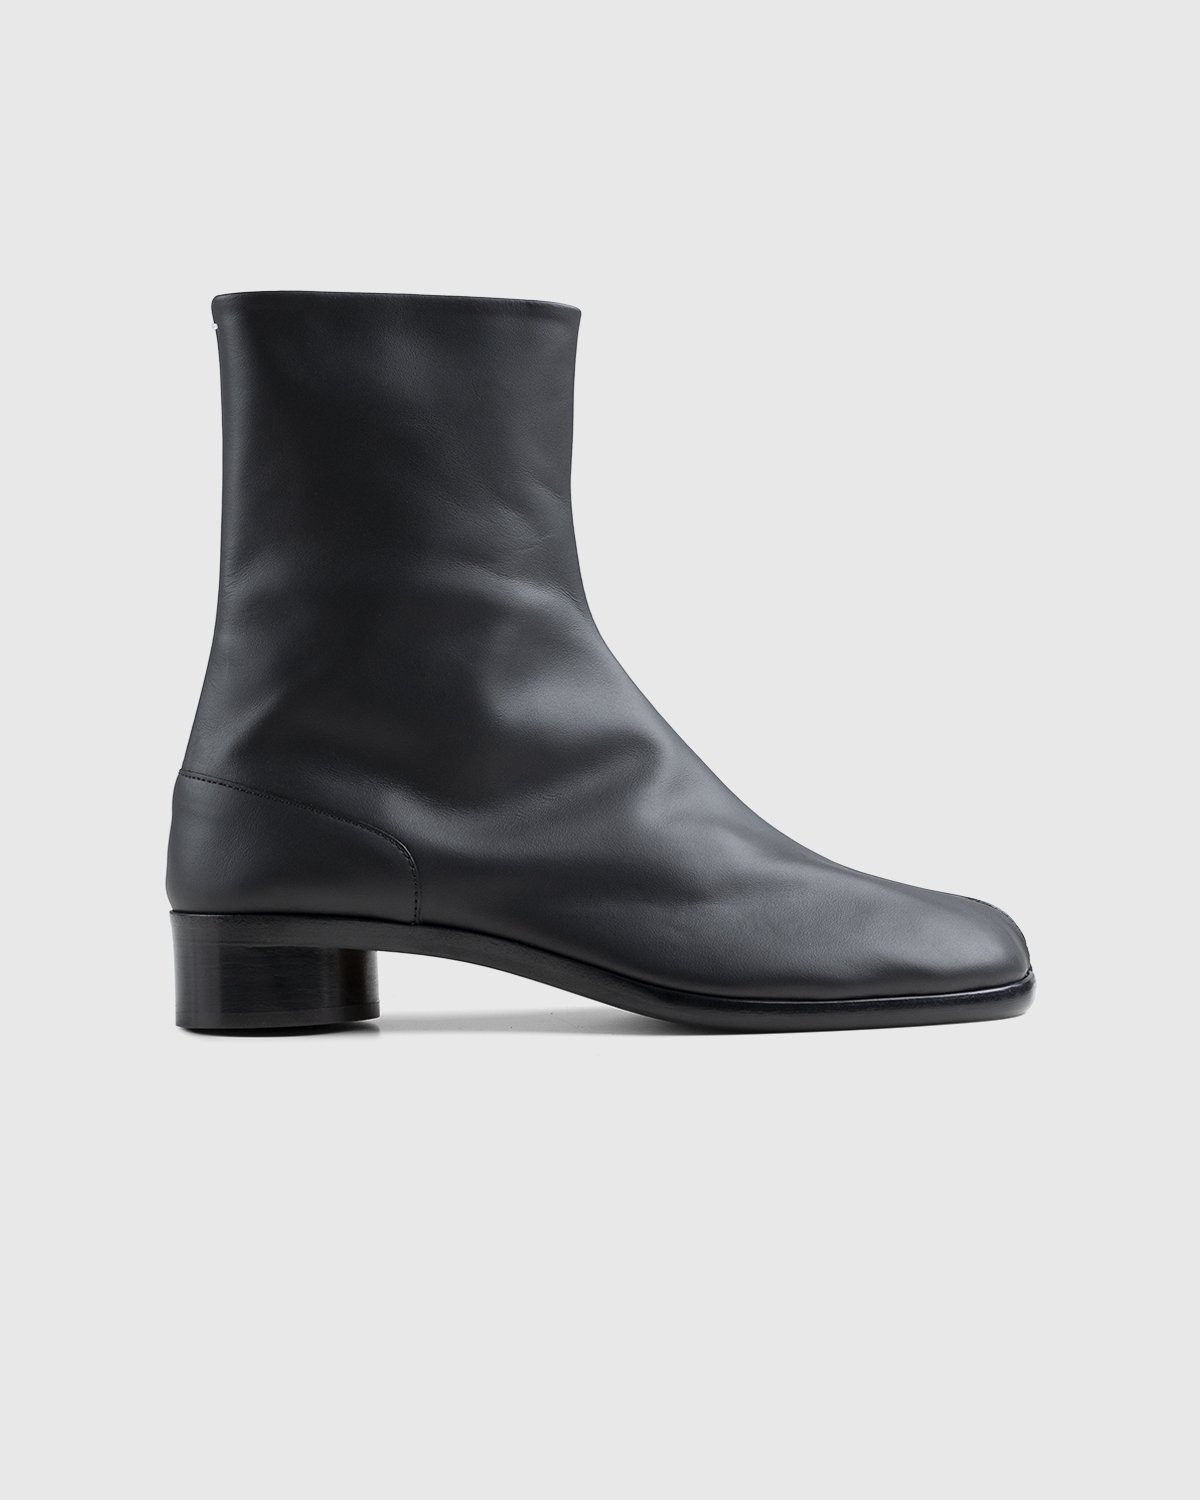 Maison Margiela – Tabi Ankle Boot Black - Heels - Black - Image 1